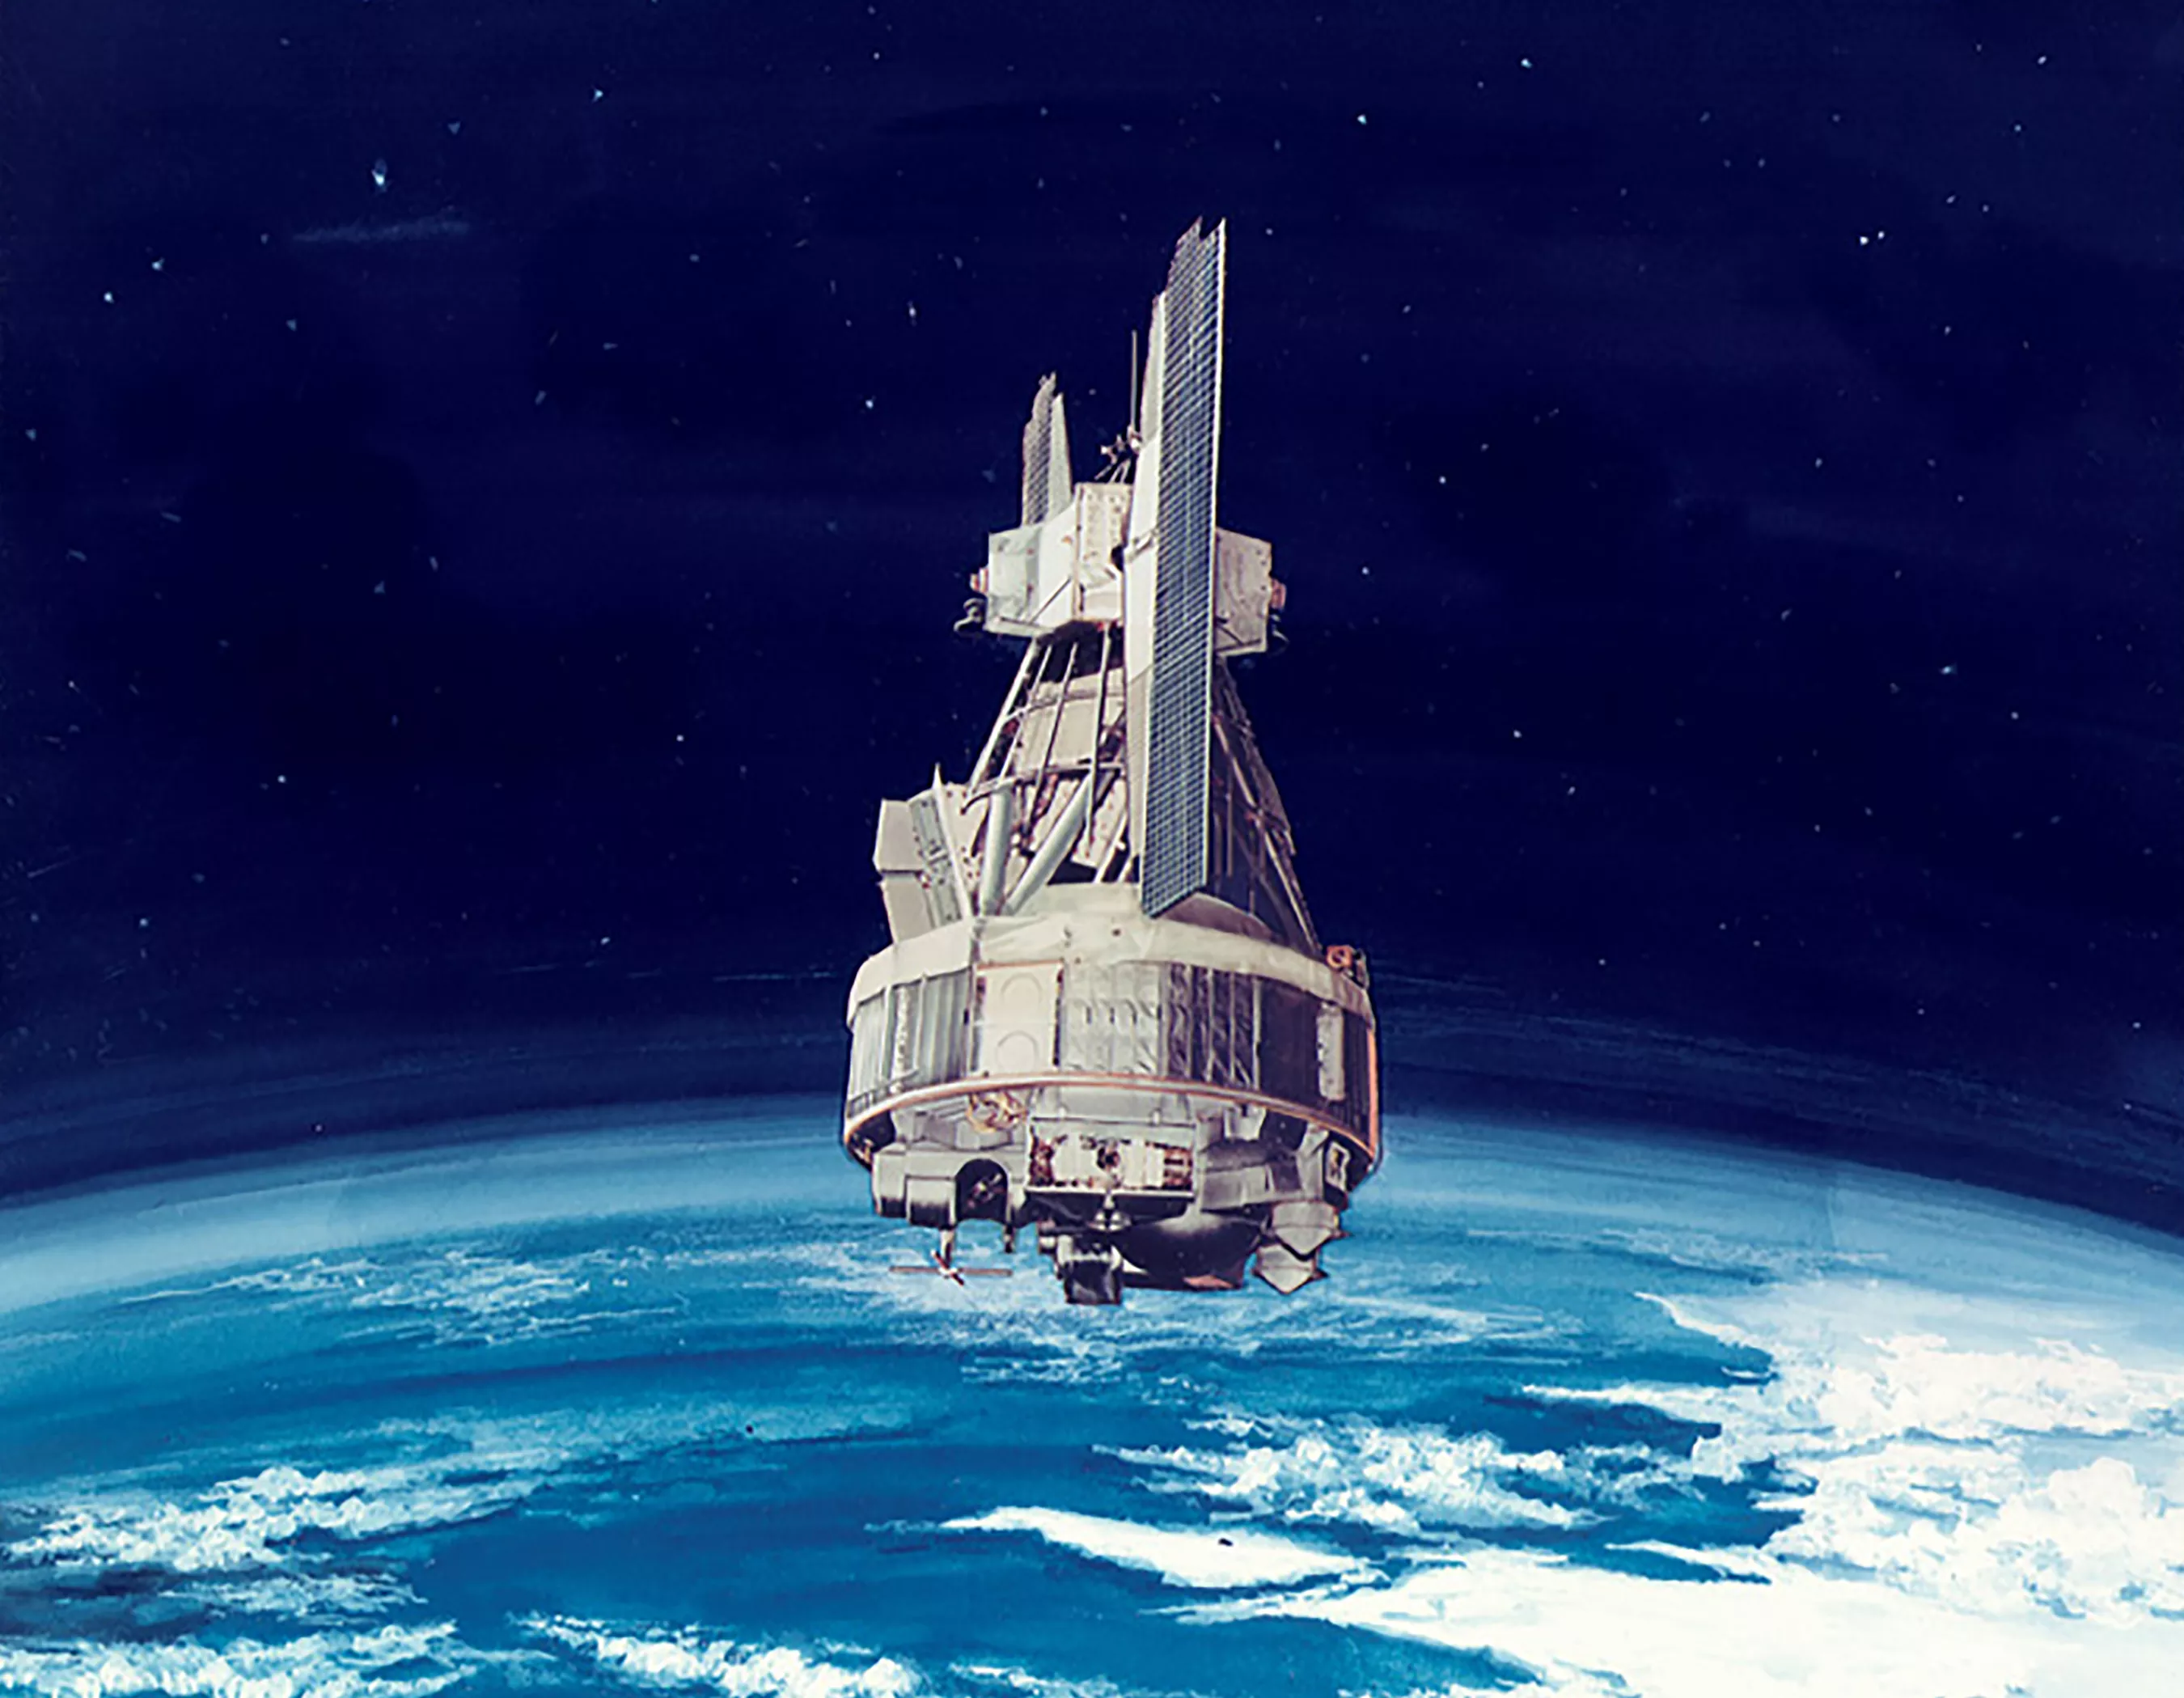 Artist's rendering of Nimbus-3 satellite orbiting the Earth